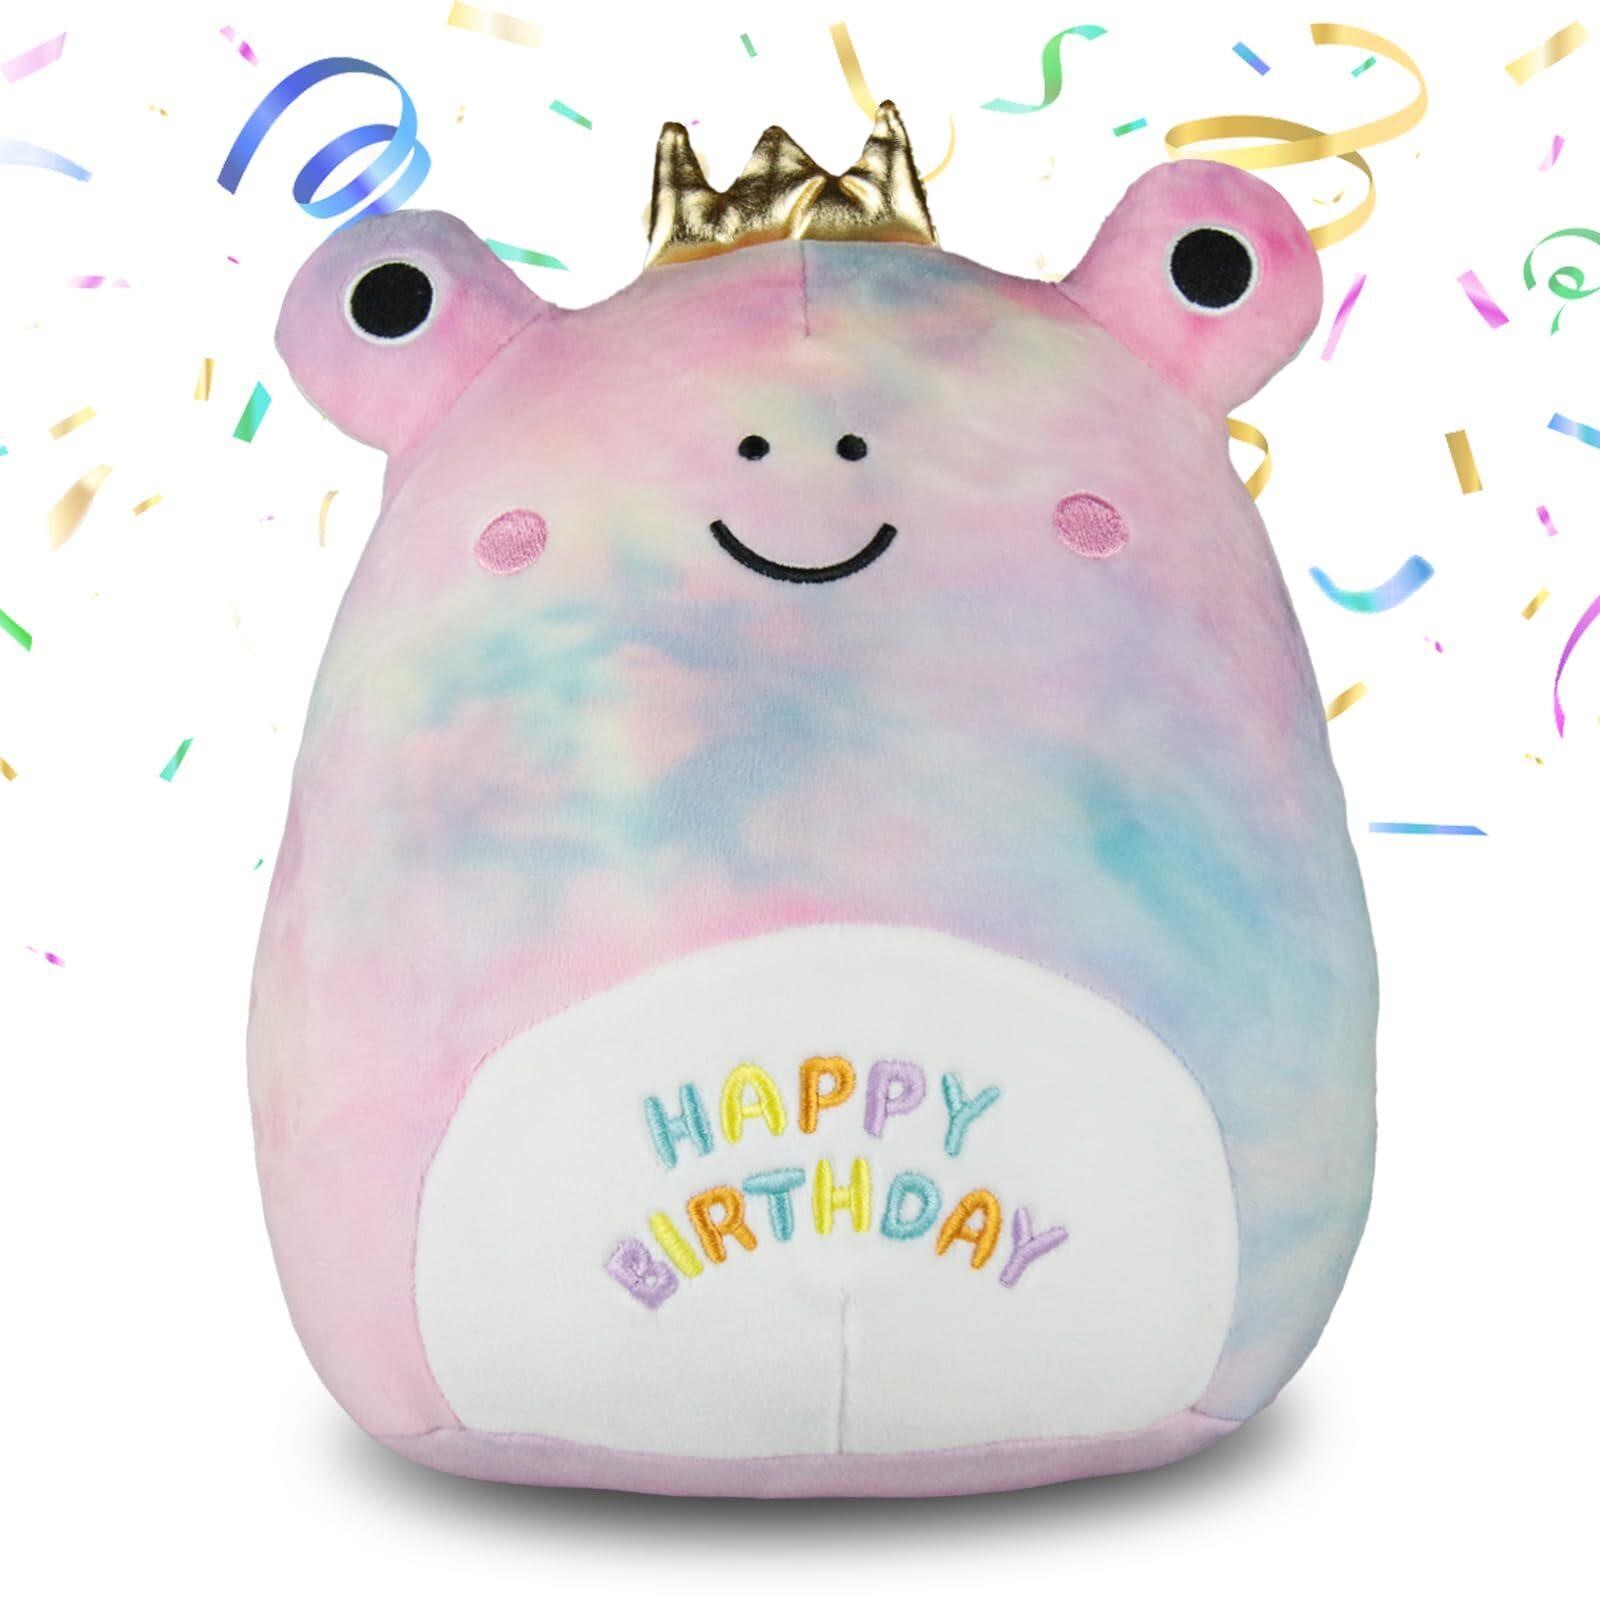 10" Birthday Stuffed Animal Soft Plush